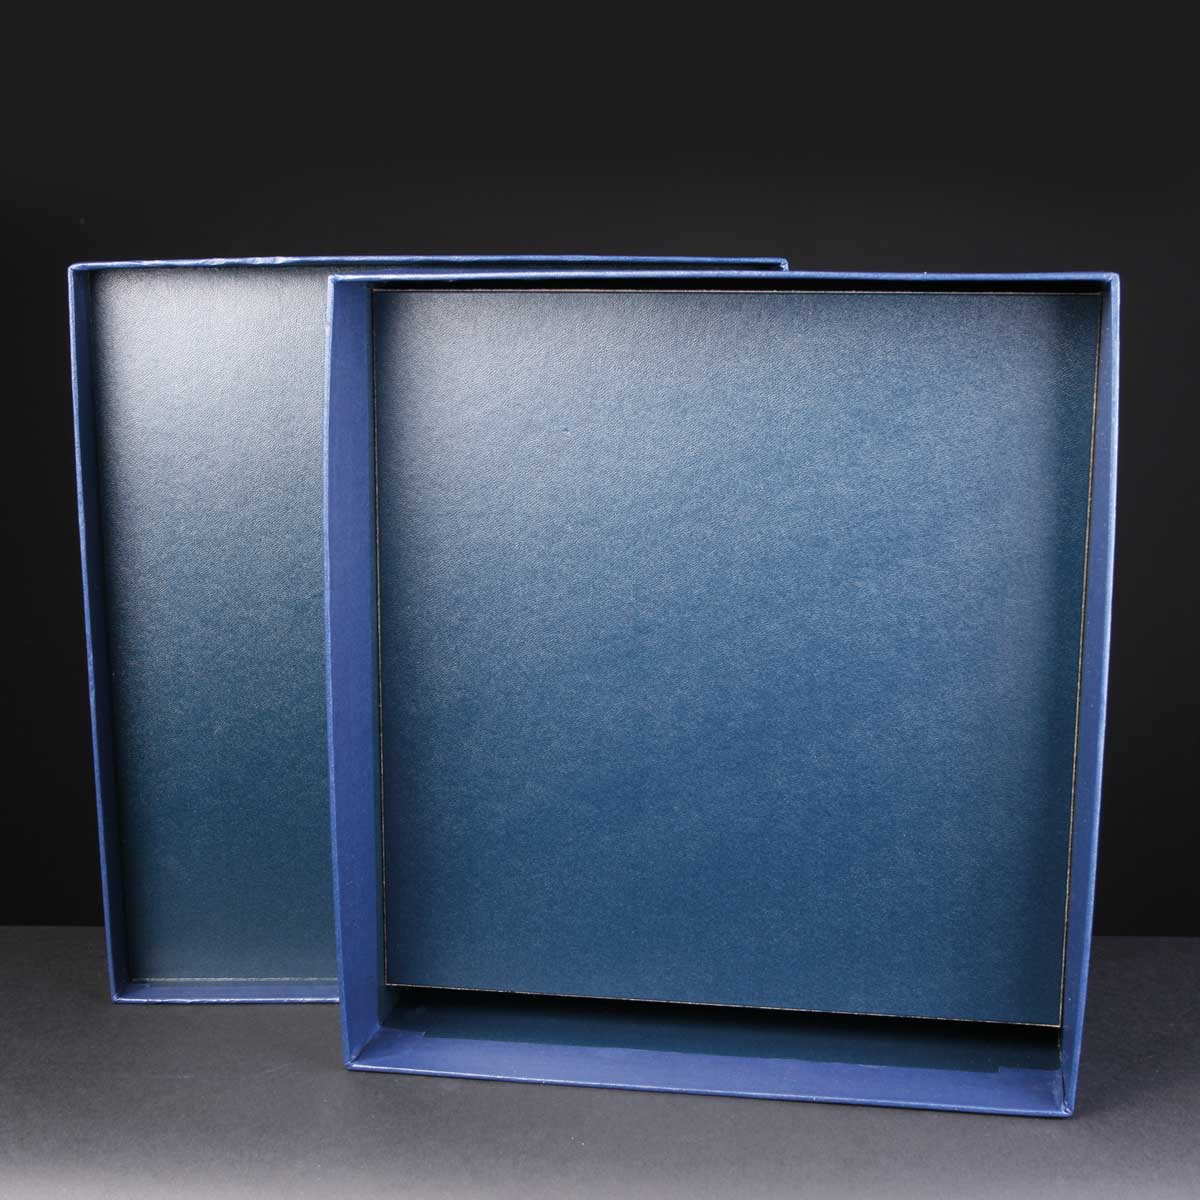 Award Box Portrait Platform 11.75x12.7x4 inches, Single, White Sleeve